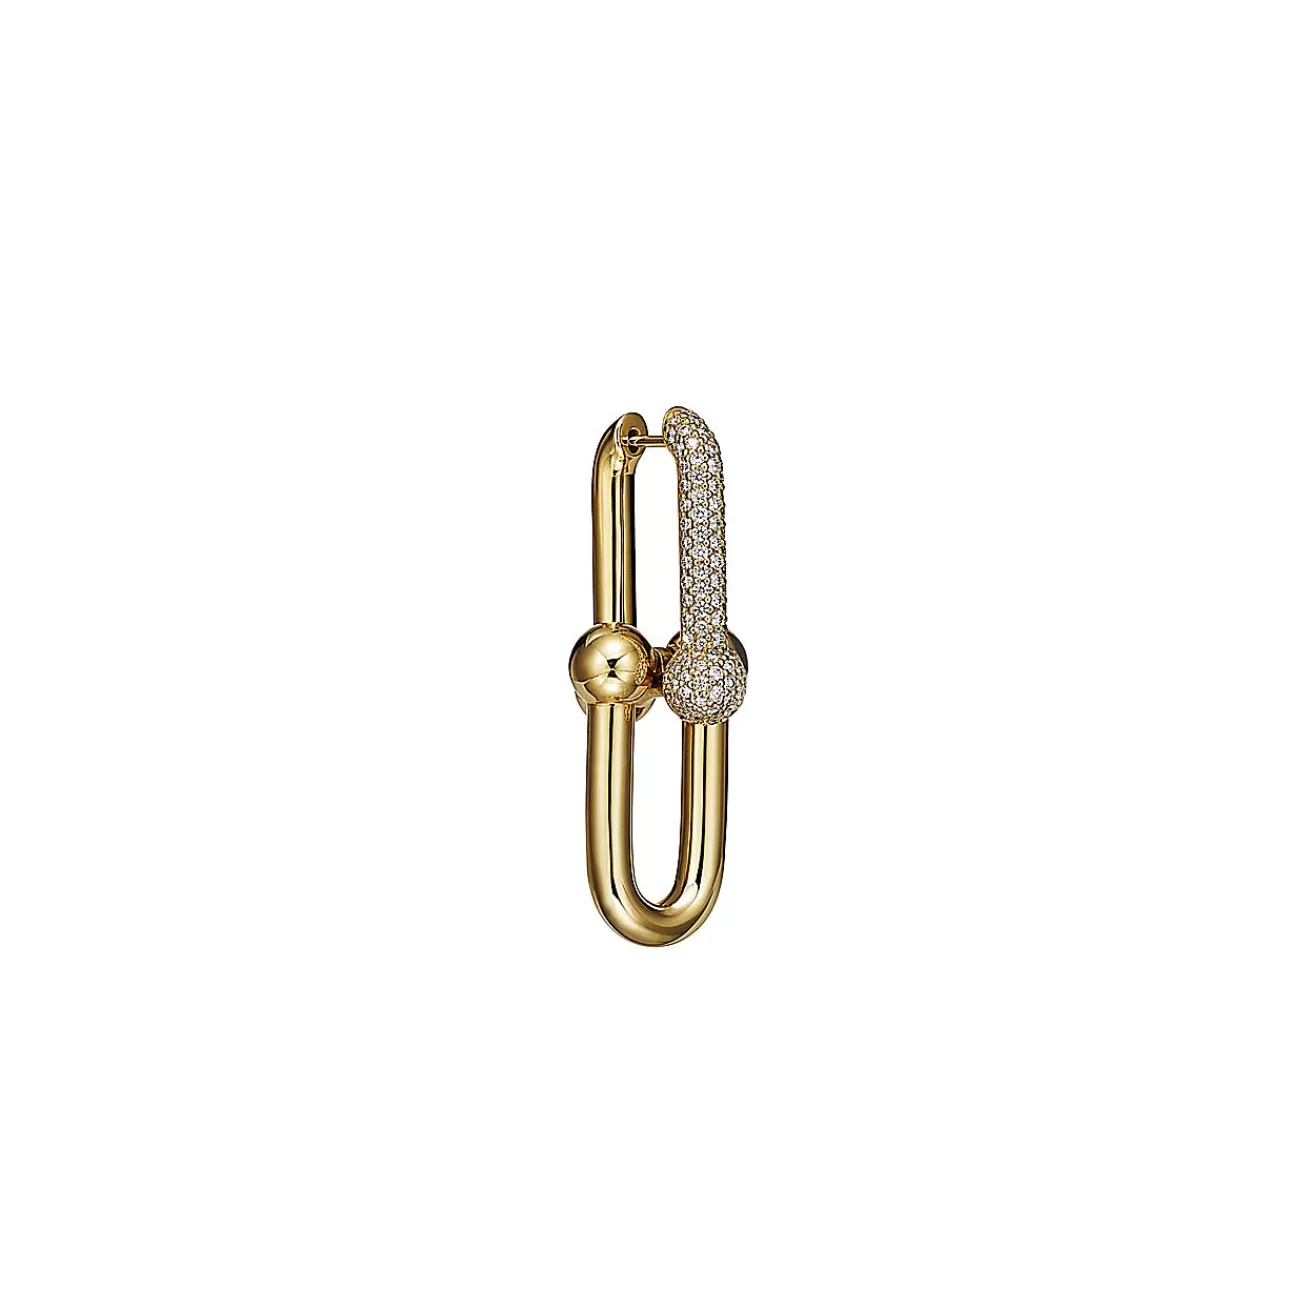 Tiffany & Co. Tiffany HardWear Large Link Earrings in Yellow Gold with Pavé Diamonds | ^ Earrings | Gold Jewelry